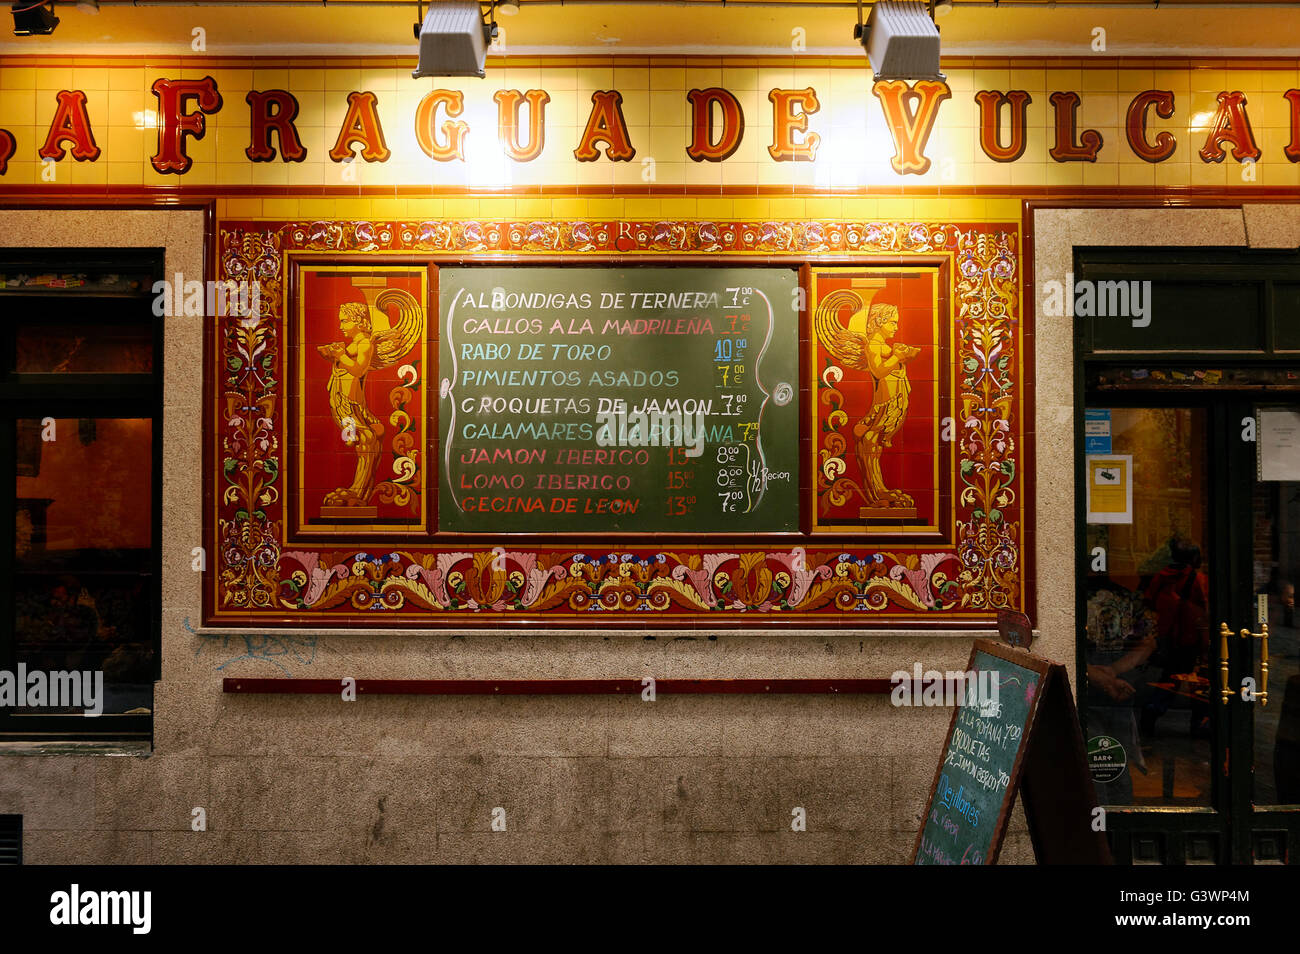 La Fragua de Vulcano Restaurant mit Kacheln verzierten Fassade und Menü, Madrid, Spanien Stockfoto